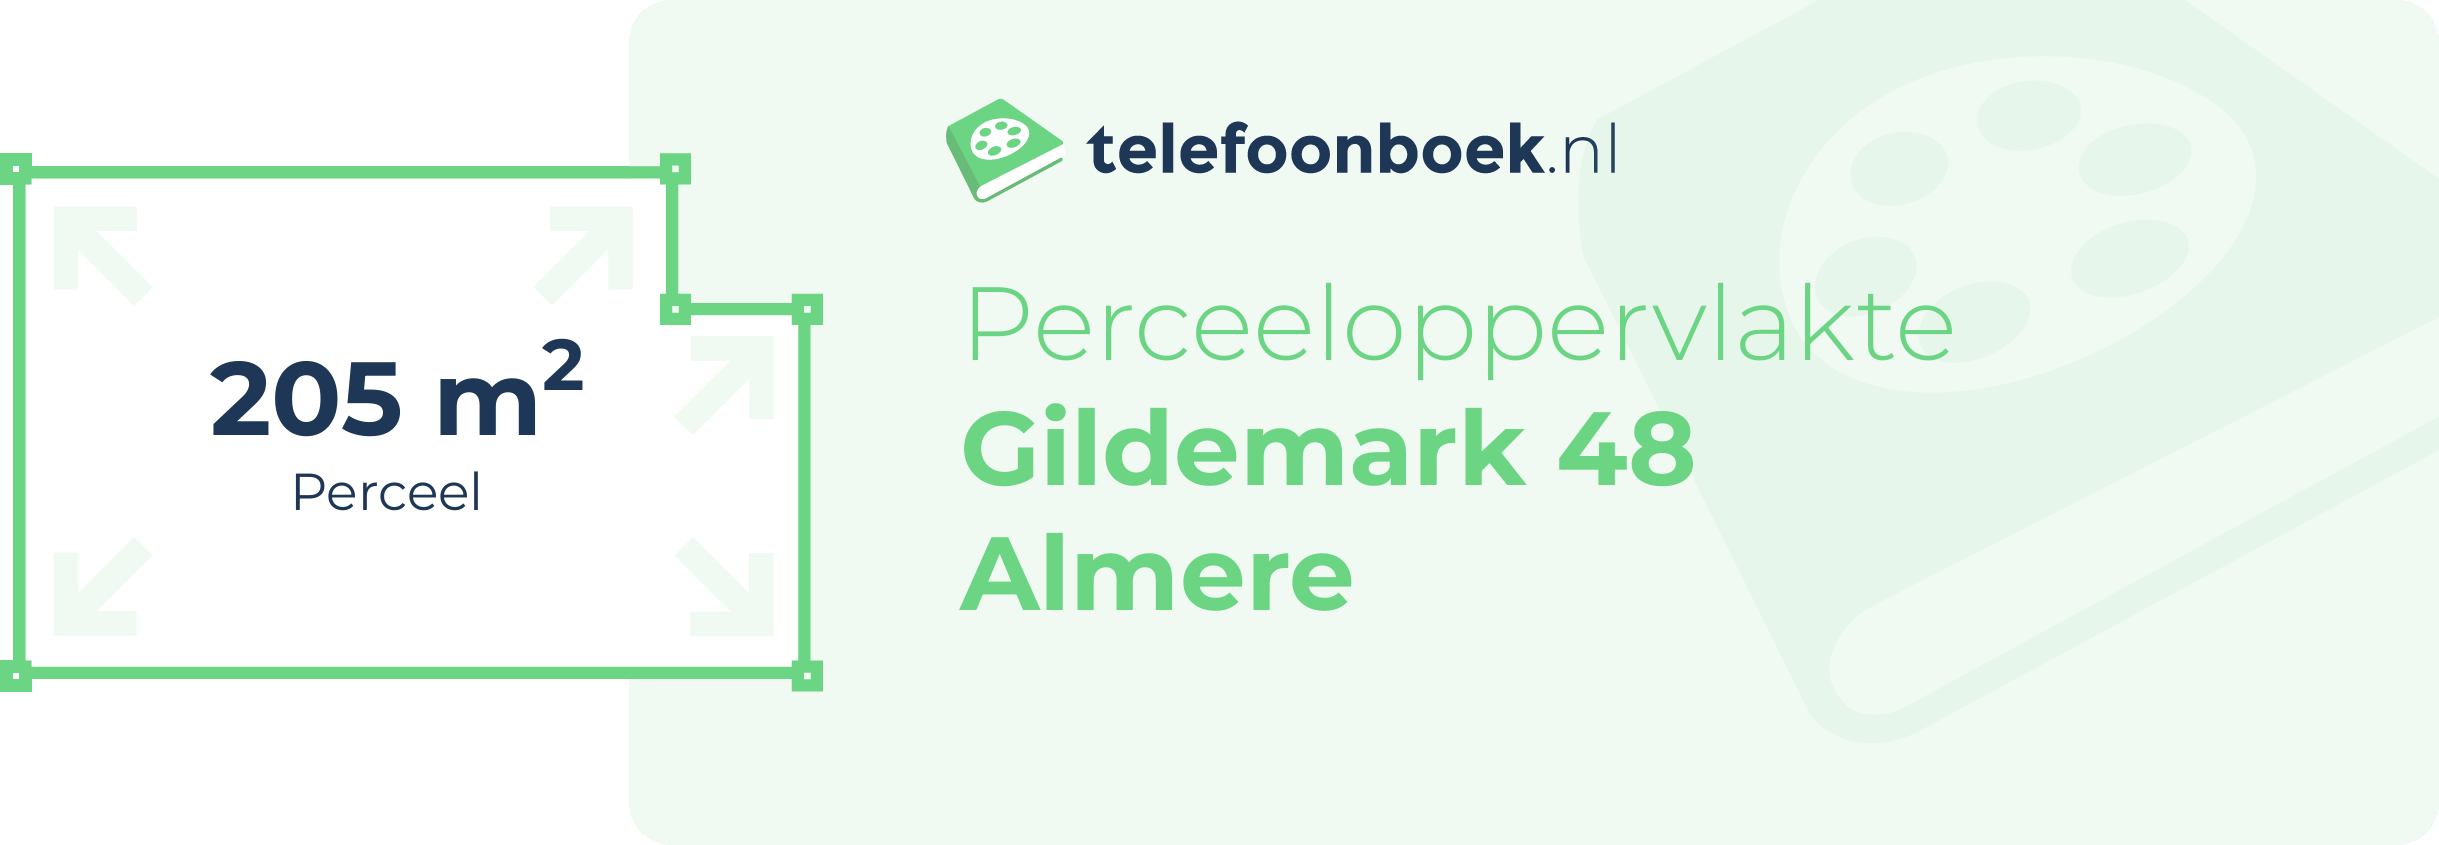 Perceeloppervlakte Gildemark 48 Almere